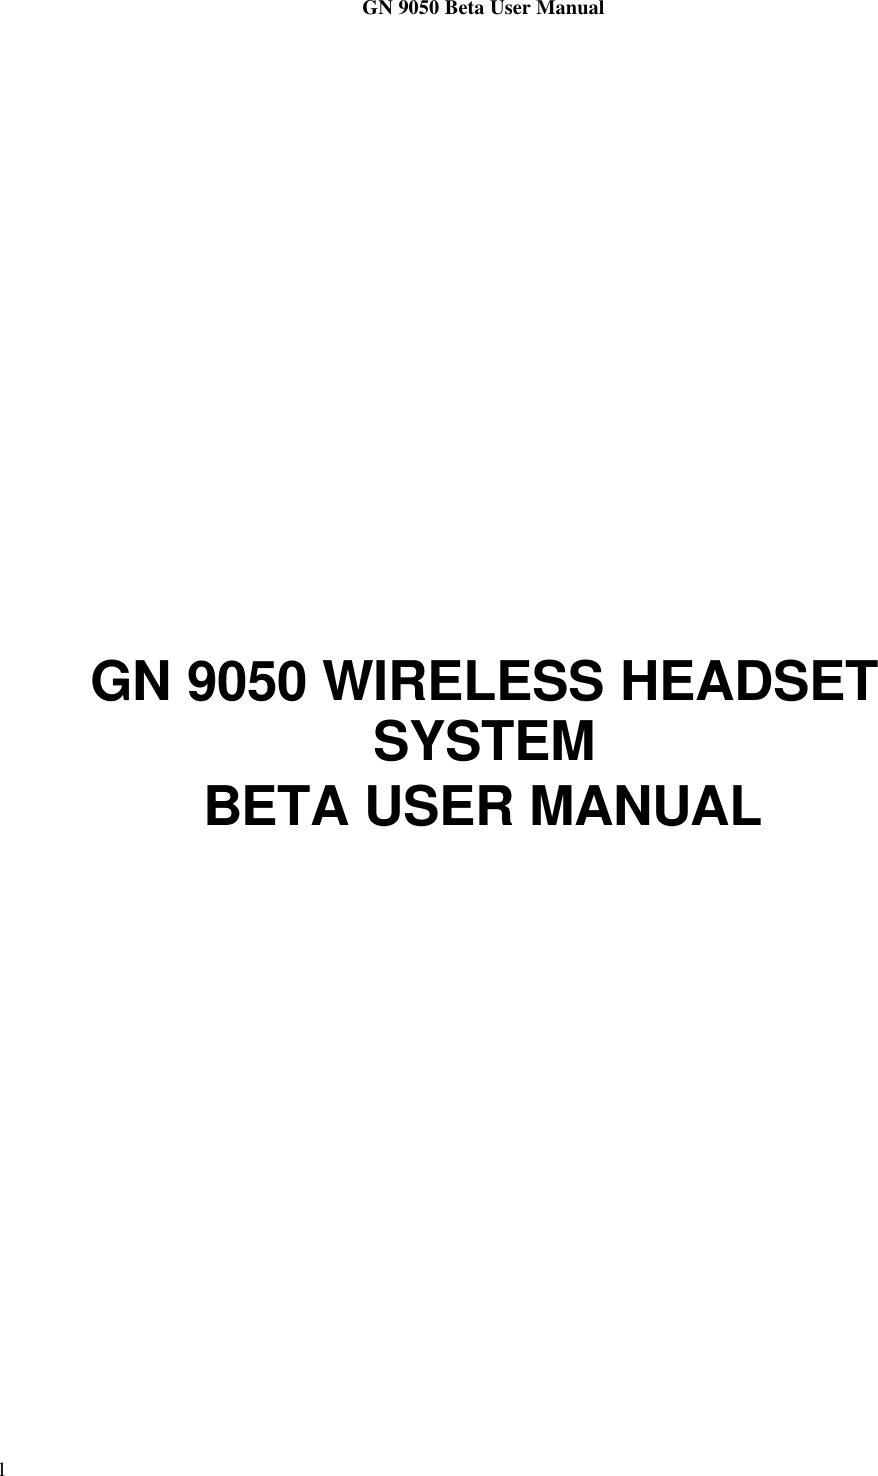 GN 9050 Beta User Manual1GN 9050 WIRELESS HEADSETSYSTEMBETA USER MANUAL